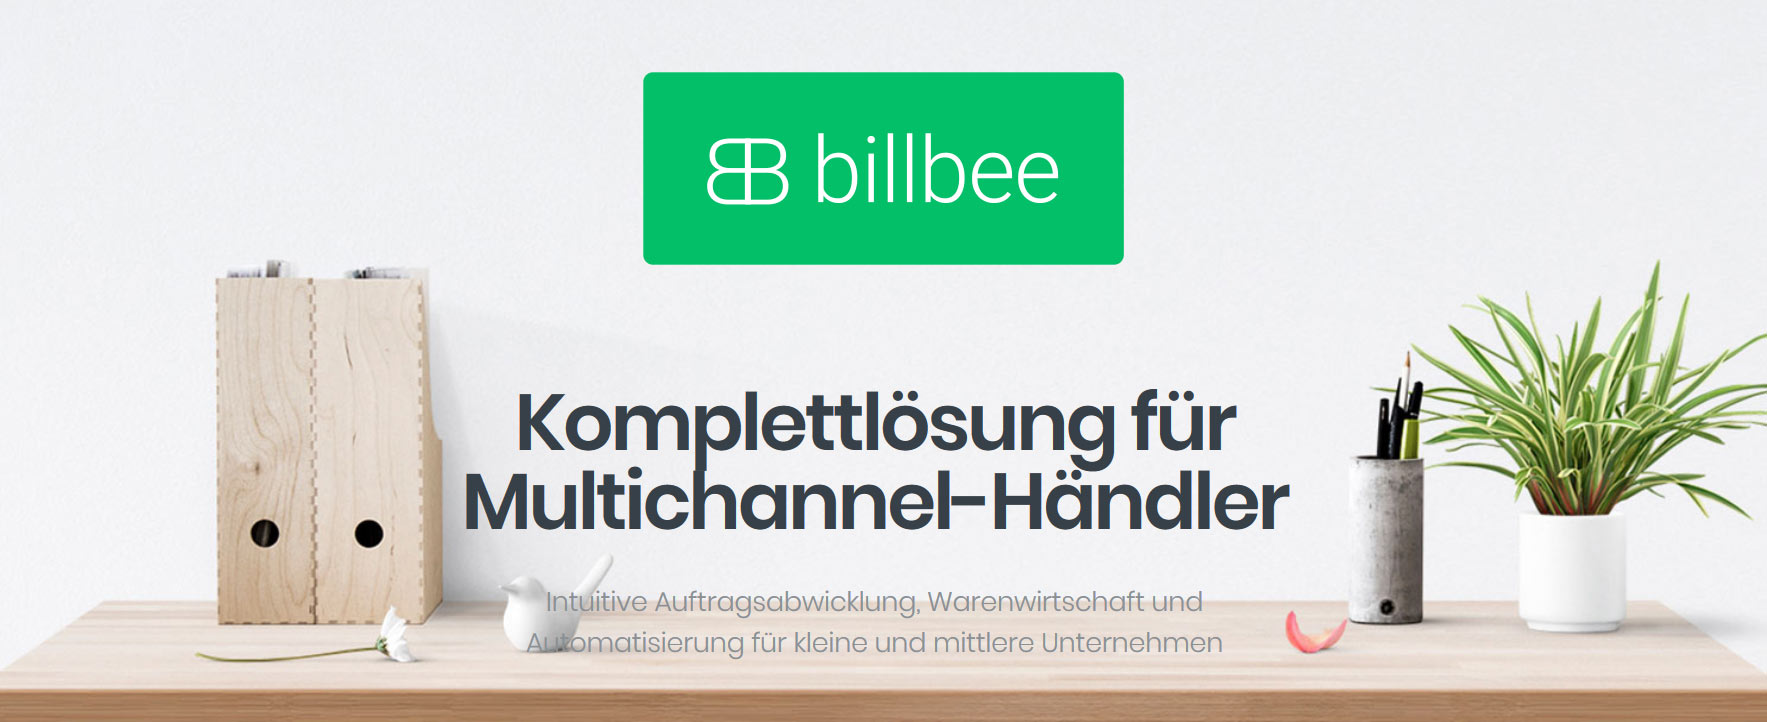 billbee-rechnungstool-fuer-onlinehaendler-amazon-ebay